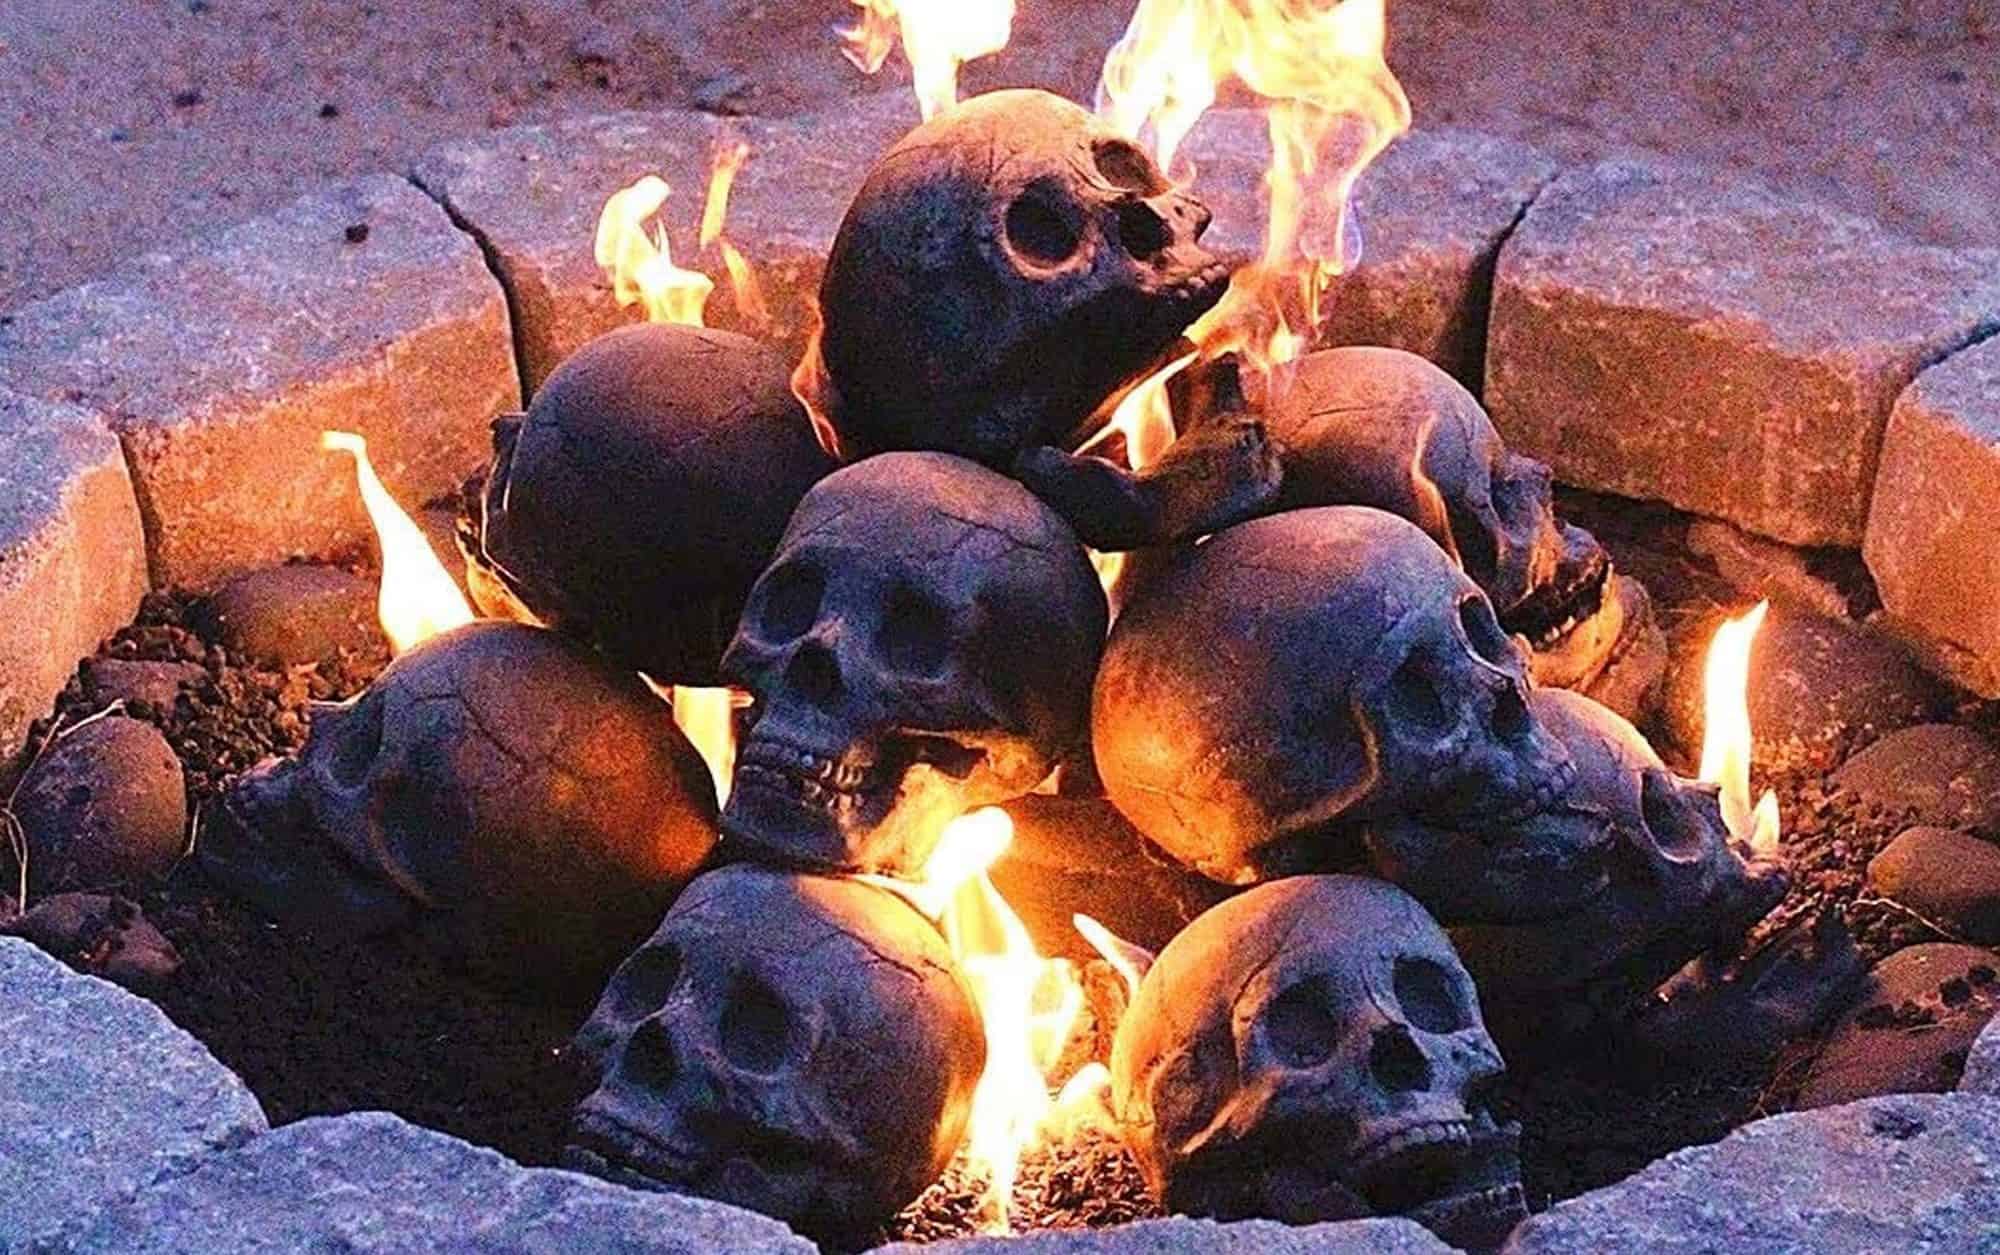 A pile of ceramic skulls in a firepit lit on fire.